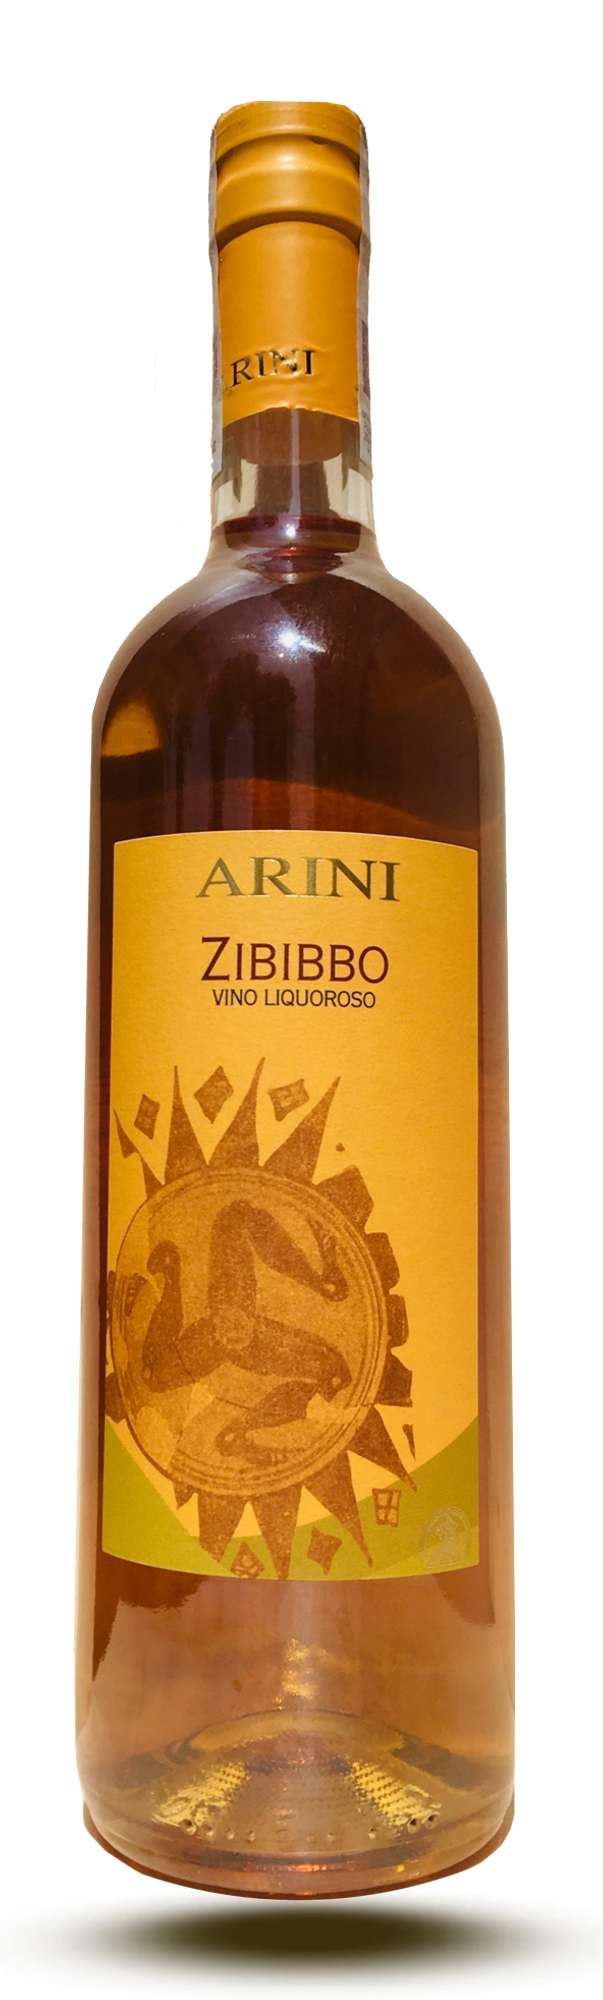 Zibibbo Vino Liquoroso Terre Siciliane